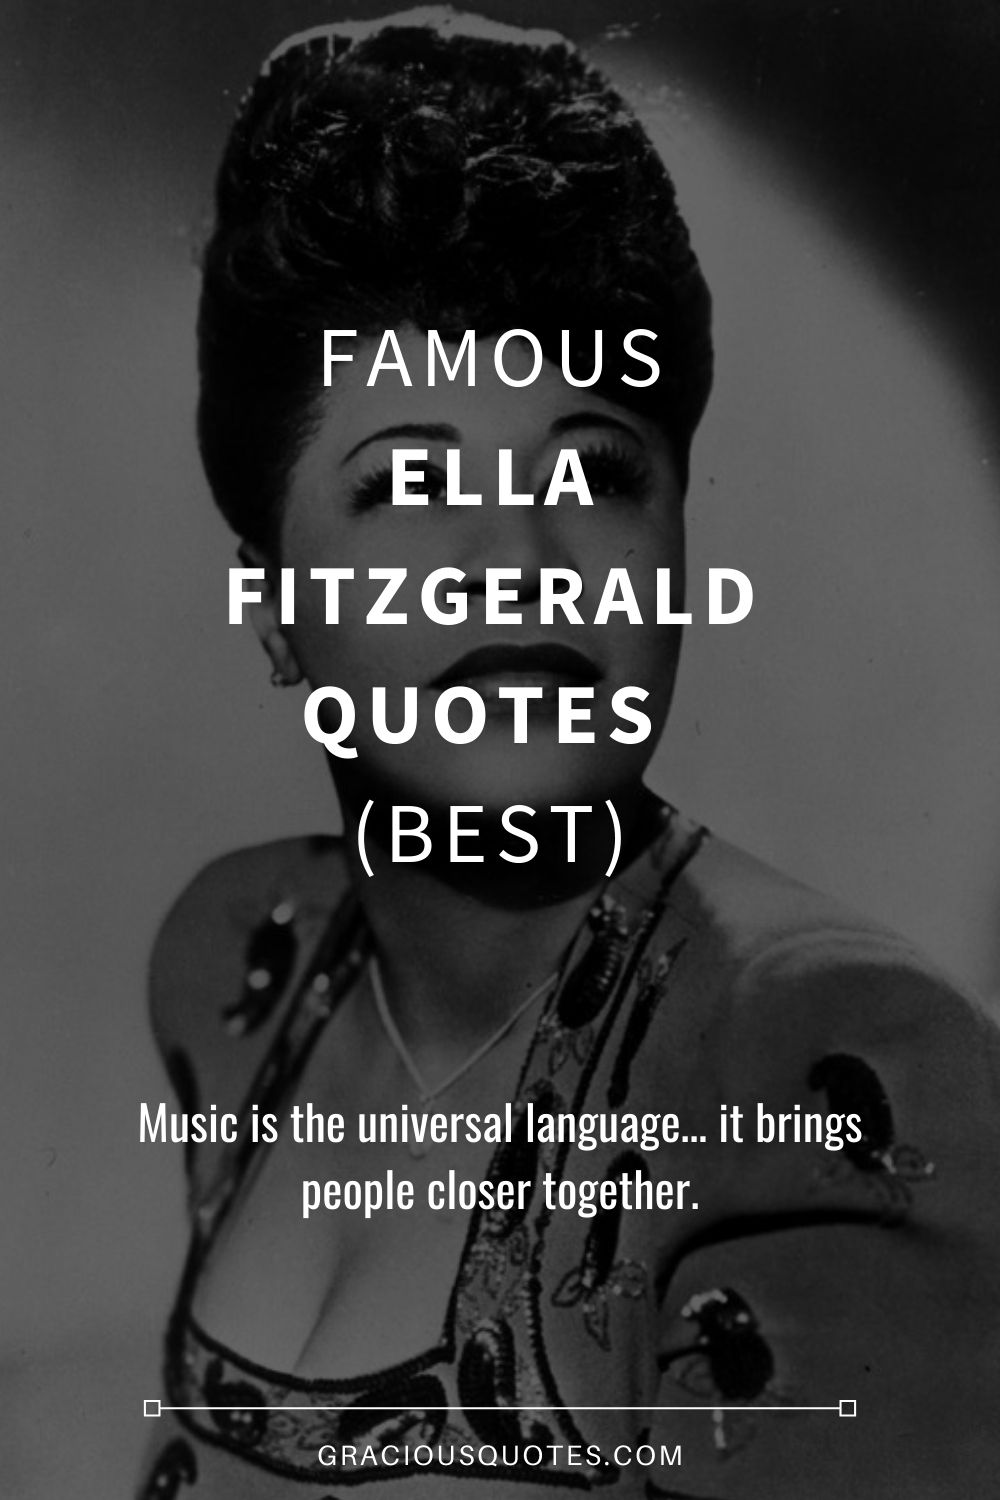 Famous Ella Fitzgerald Quotes (BEST) - Gracious Quotes